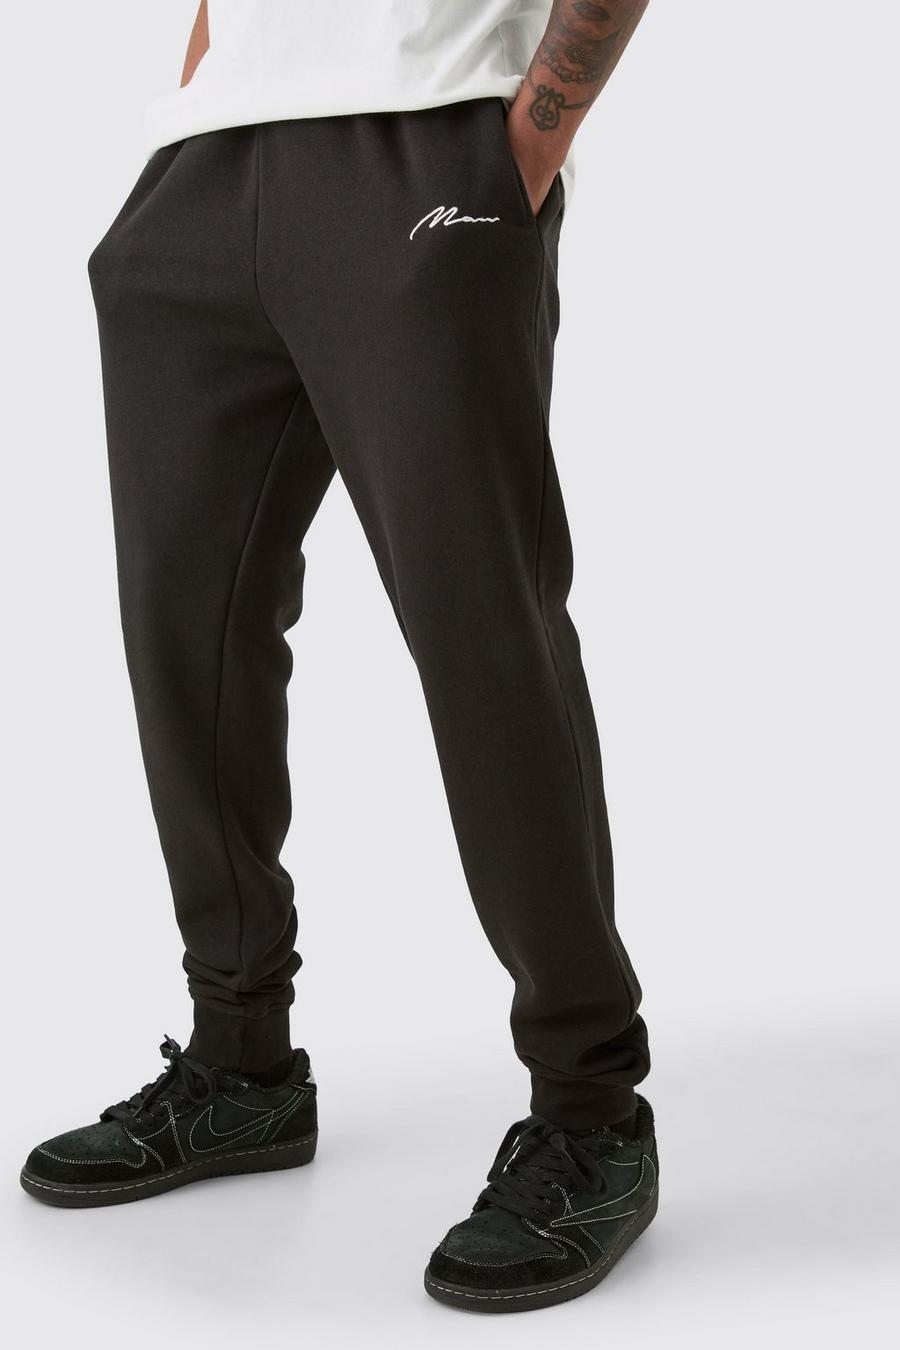 Pantaloni tuta Tall Slim Fit neri con firma Man, Black image number 1